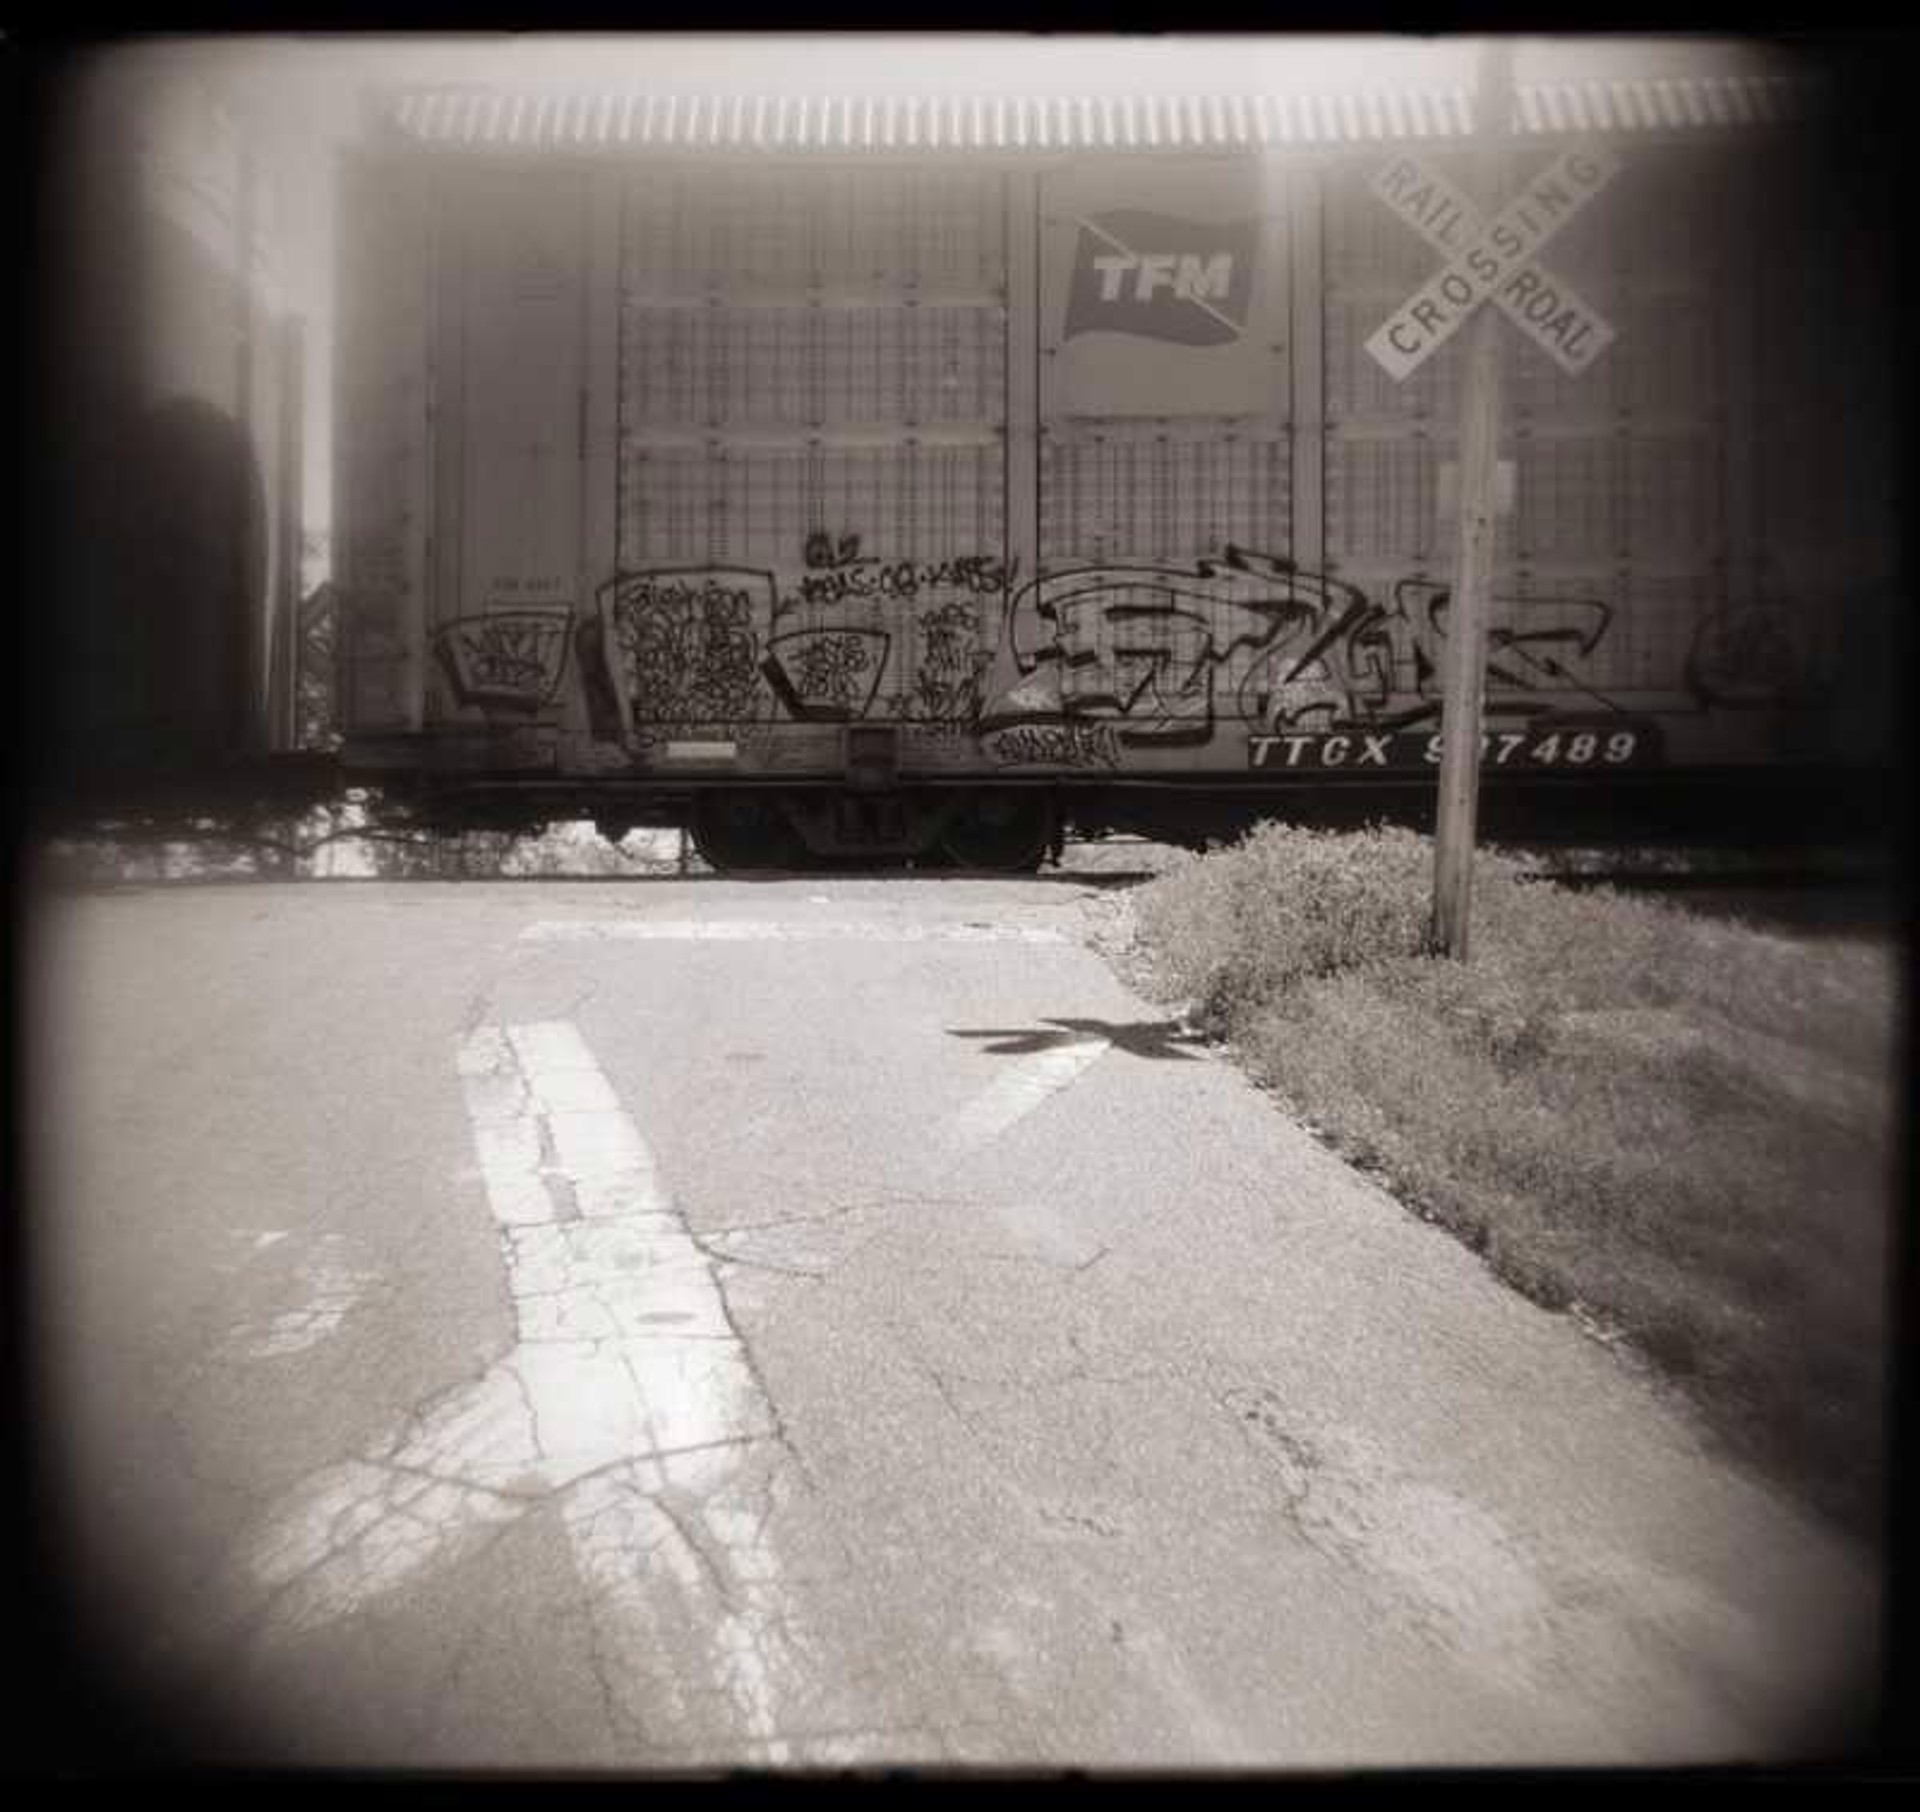 Train / Tracks / Graffiti by George Yerger